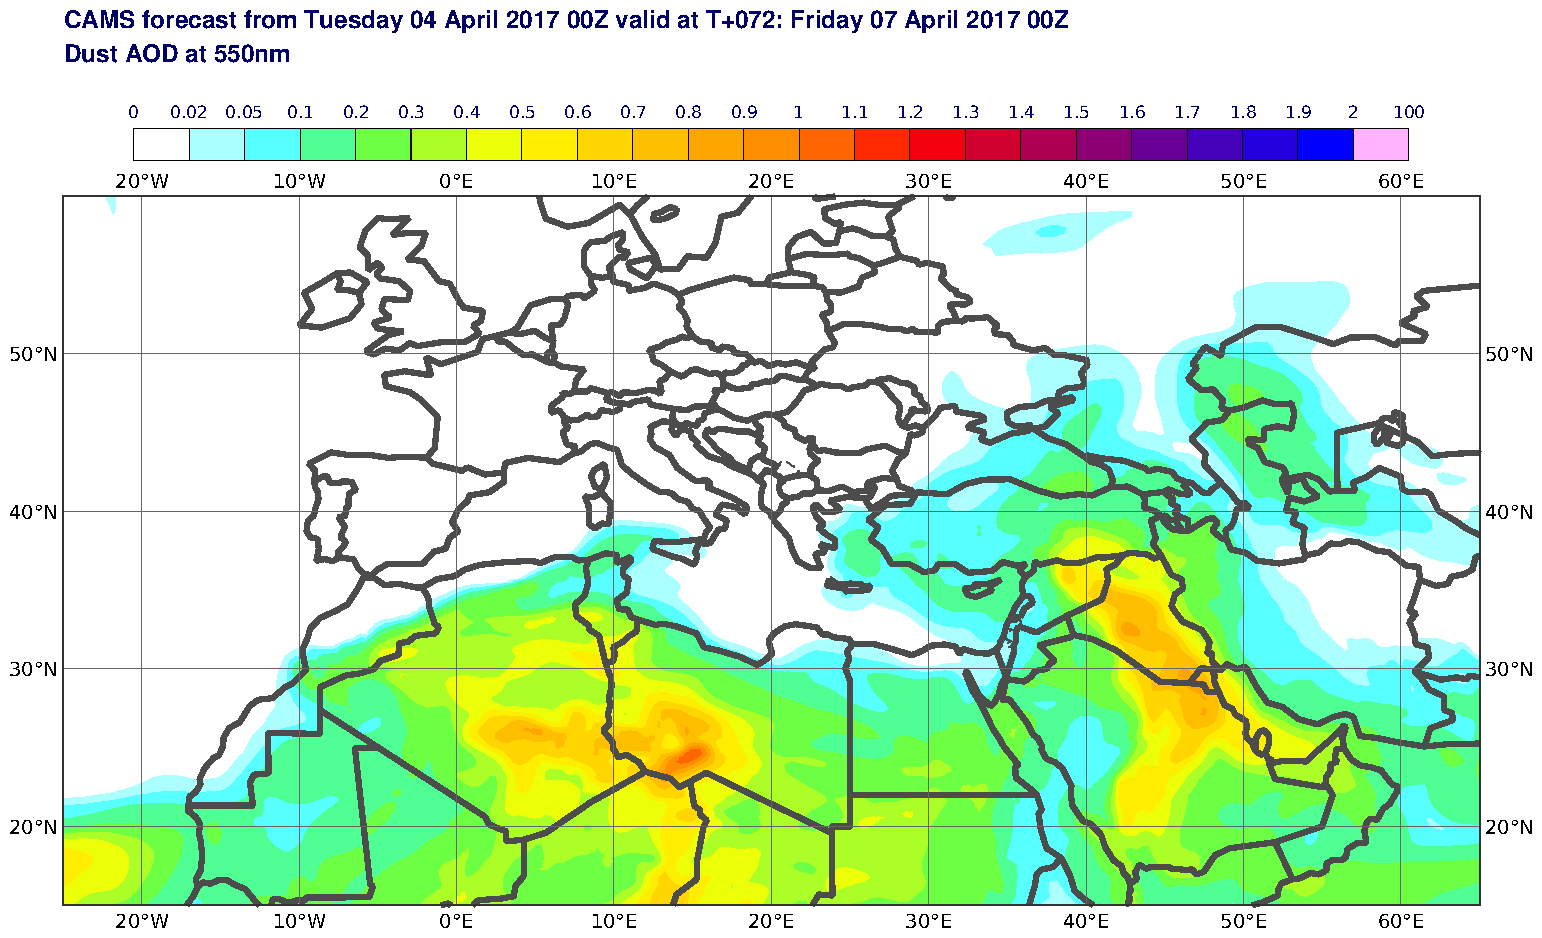 Dust AOD at 550nm valid at T72 - 2017-04-07 00:00